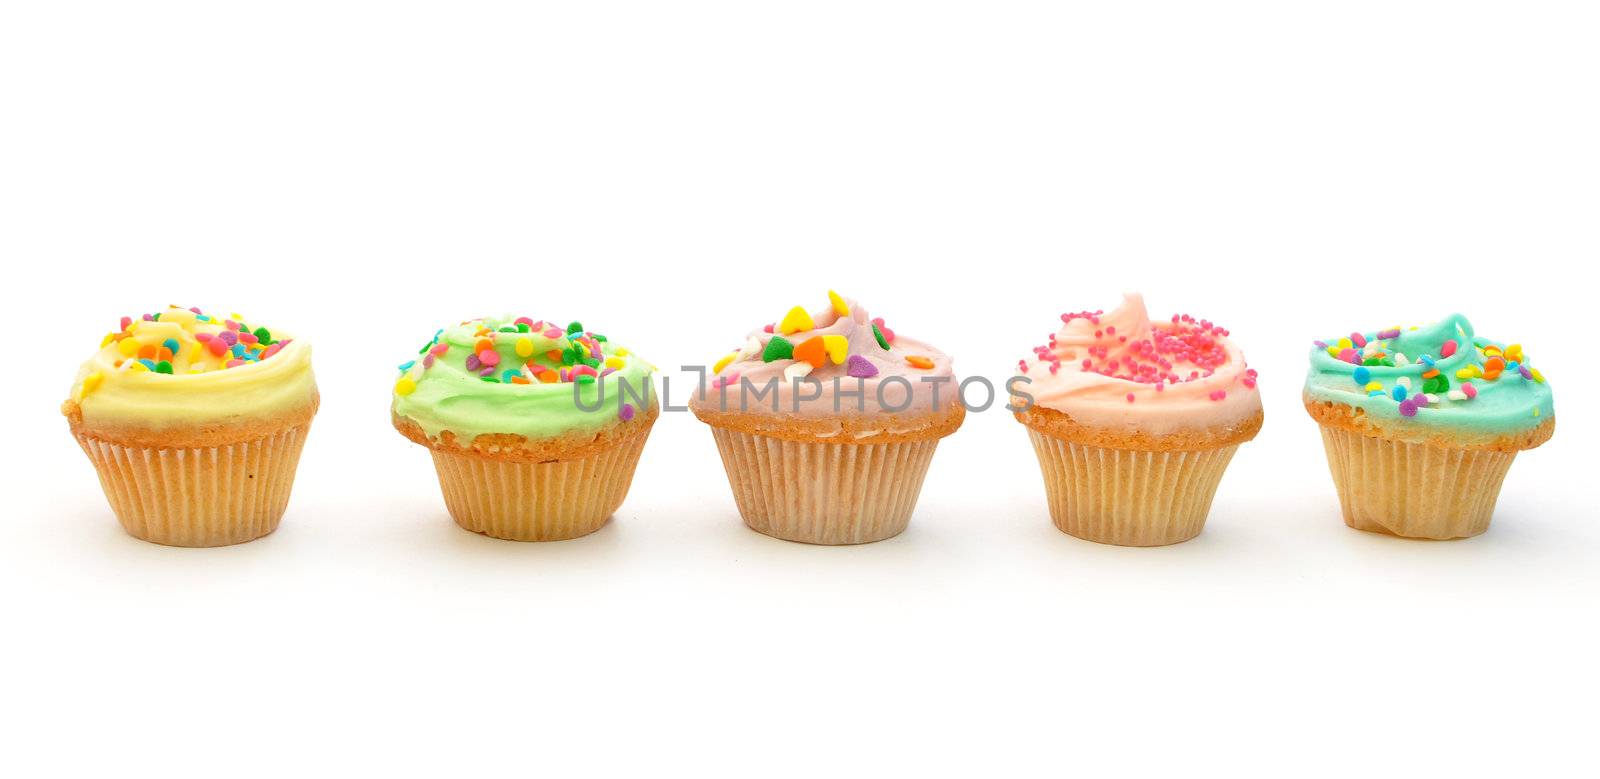 Cupcakes by unikpix